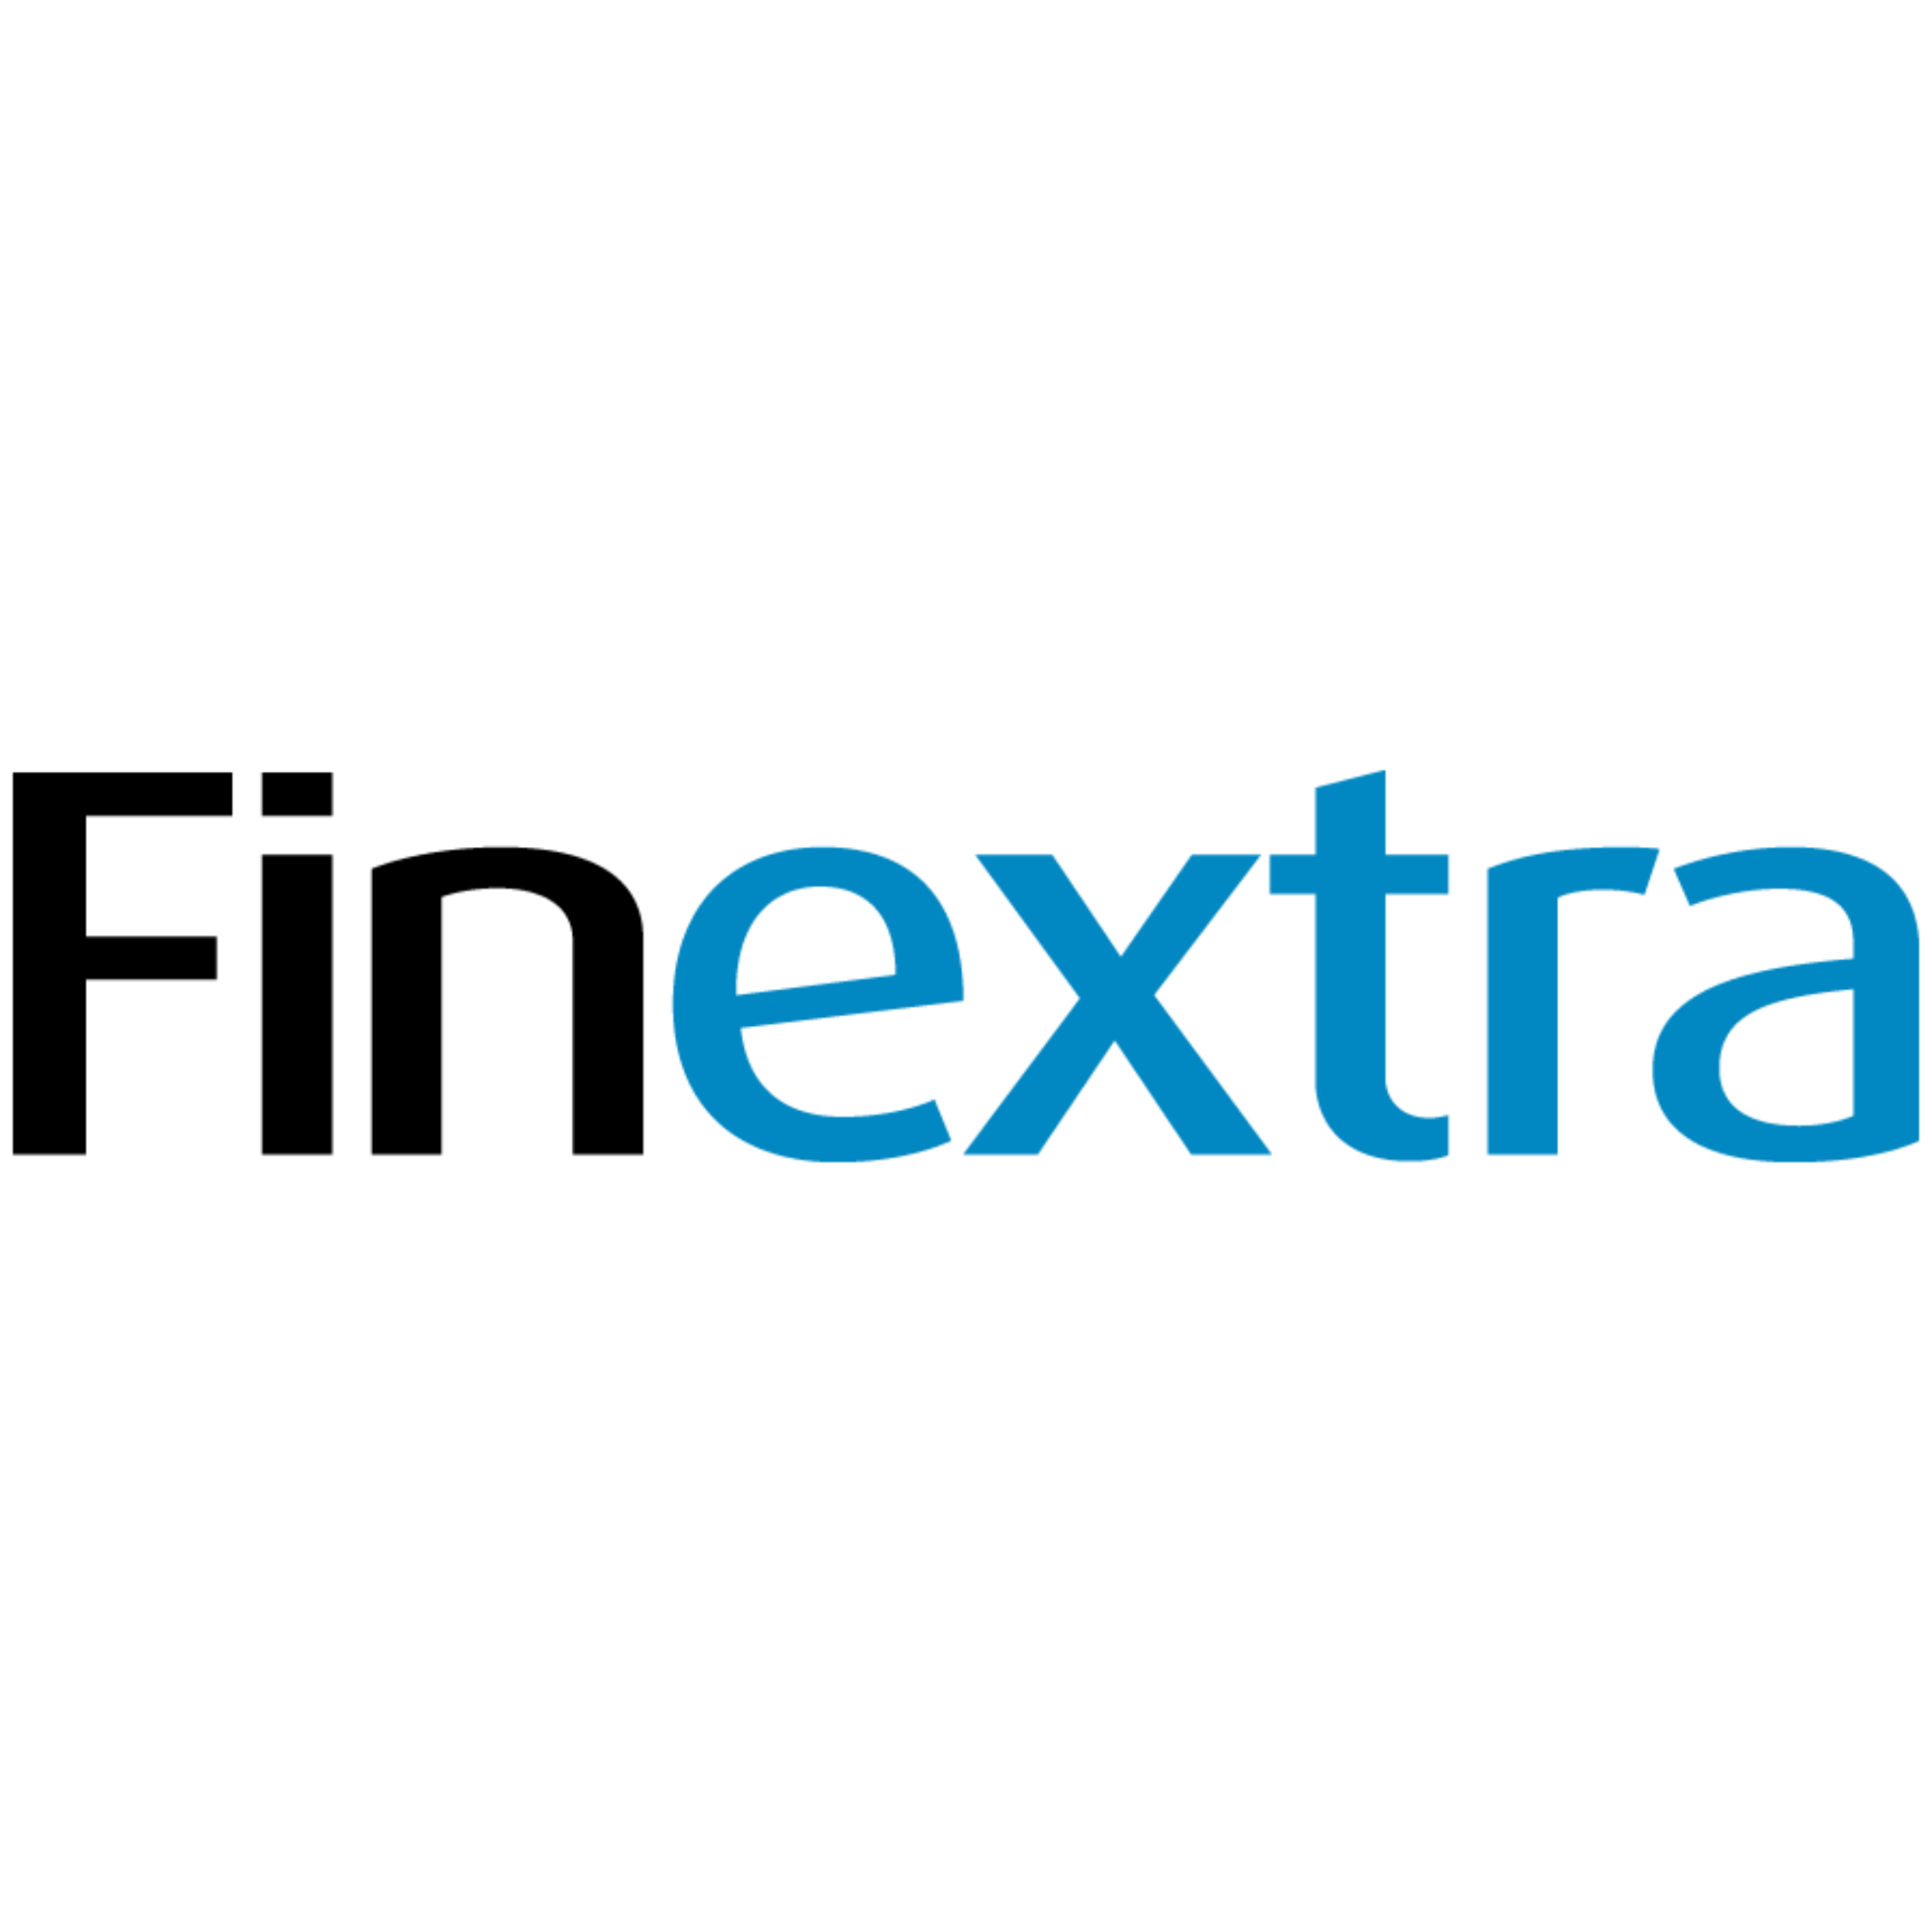 FinExtra logo